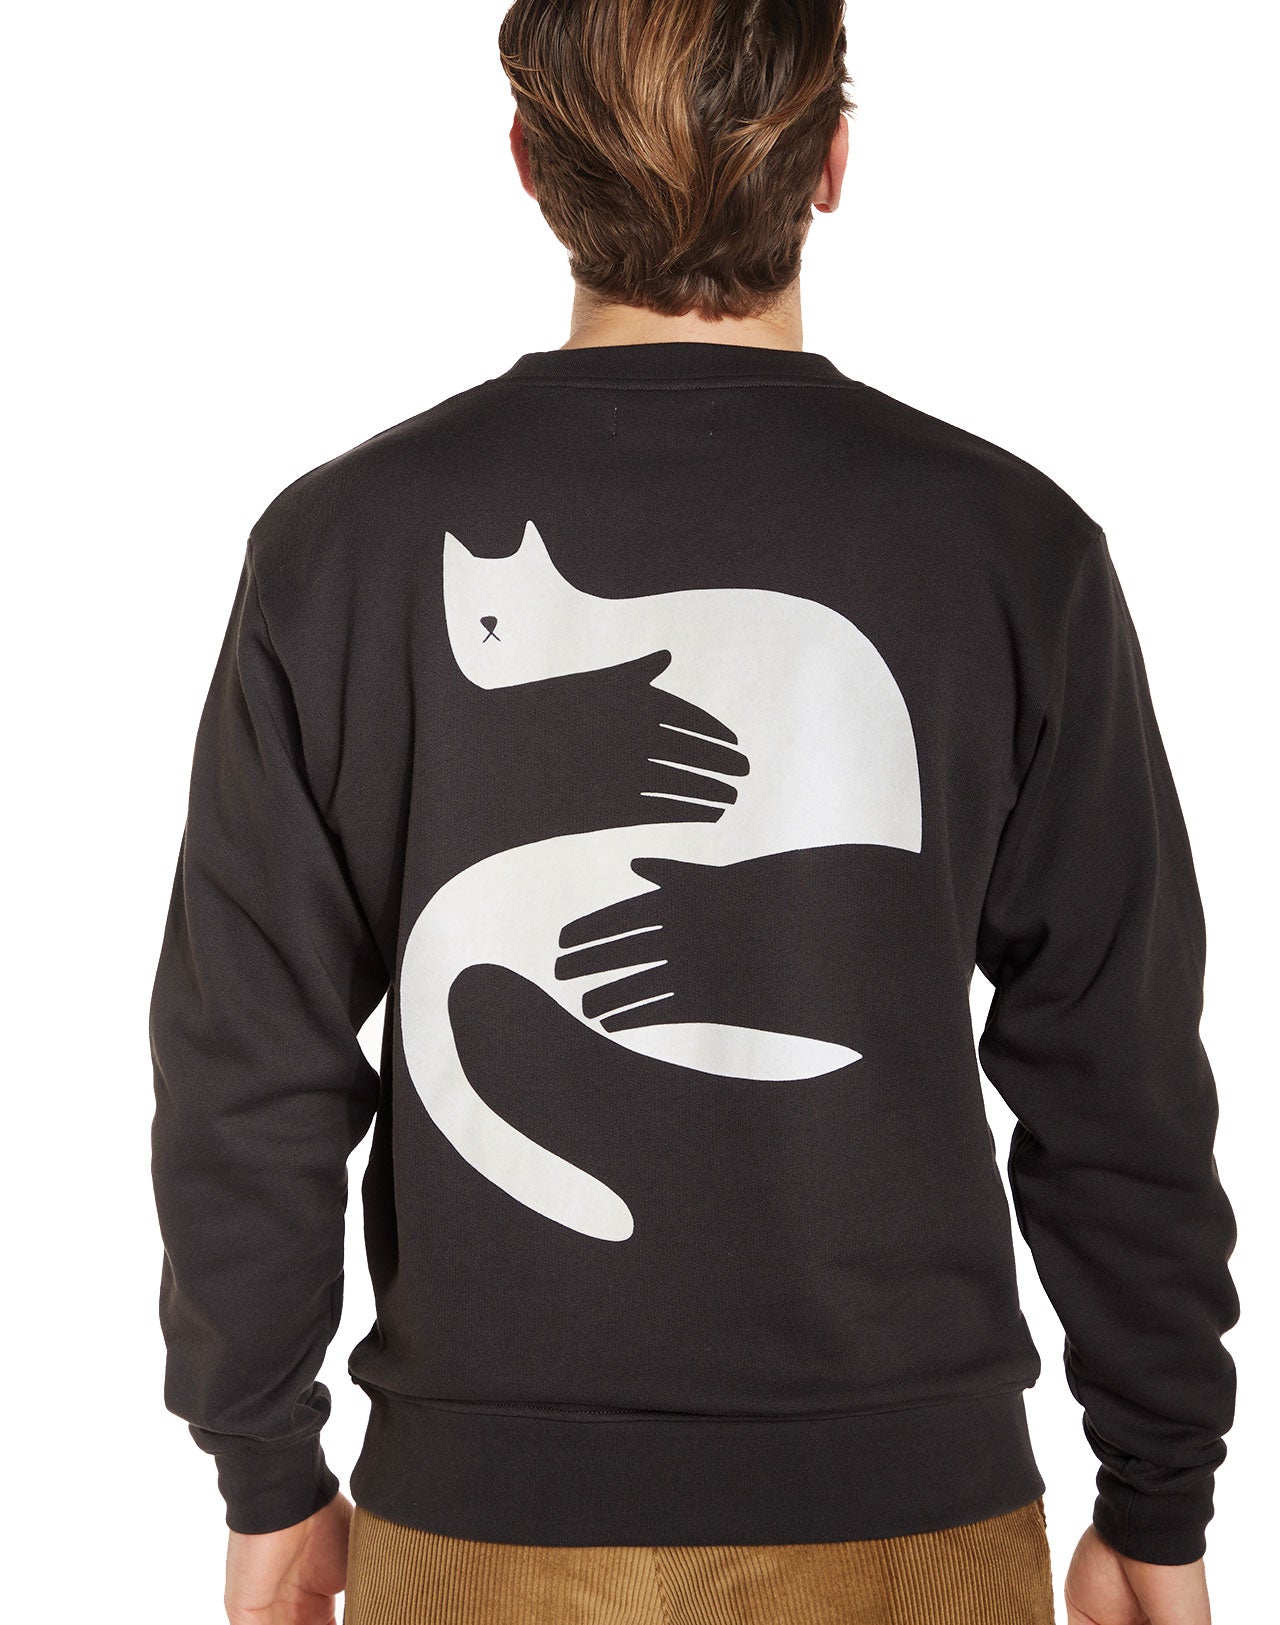 Cat Hug Sweater